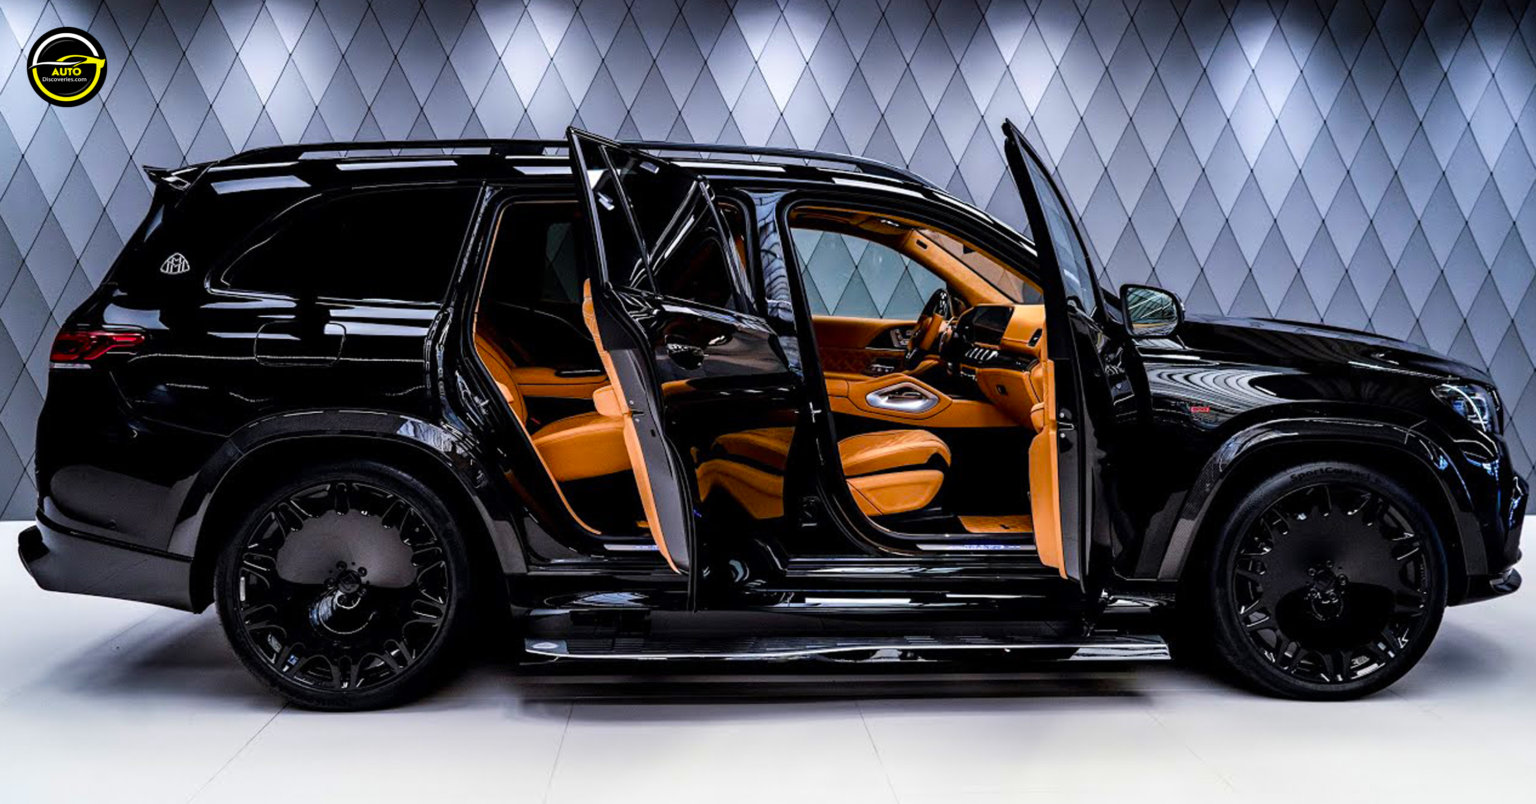 2023 Black Brabus Maybach GLS 800 Luxury SUV In Detail